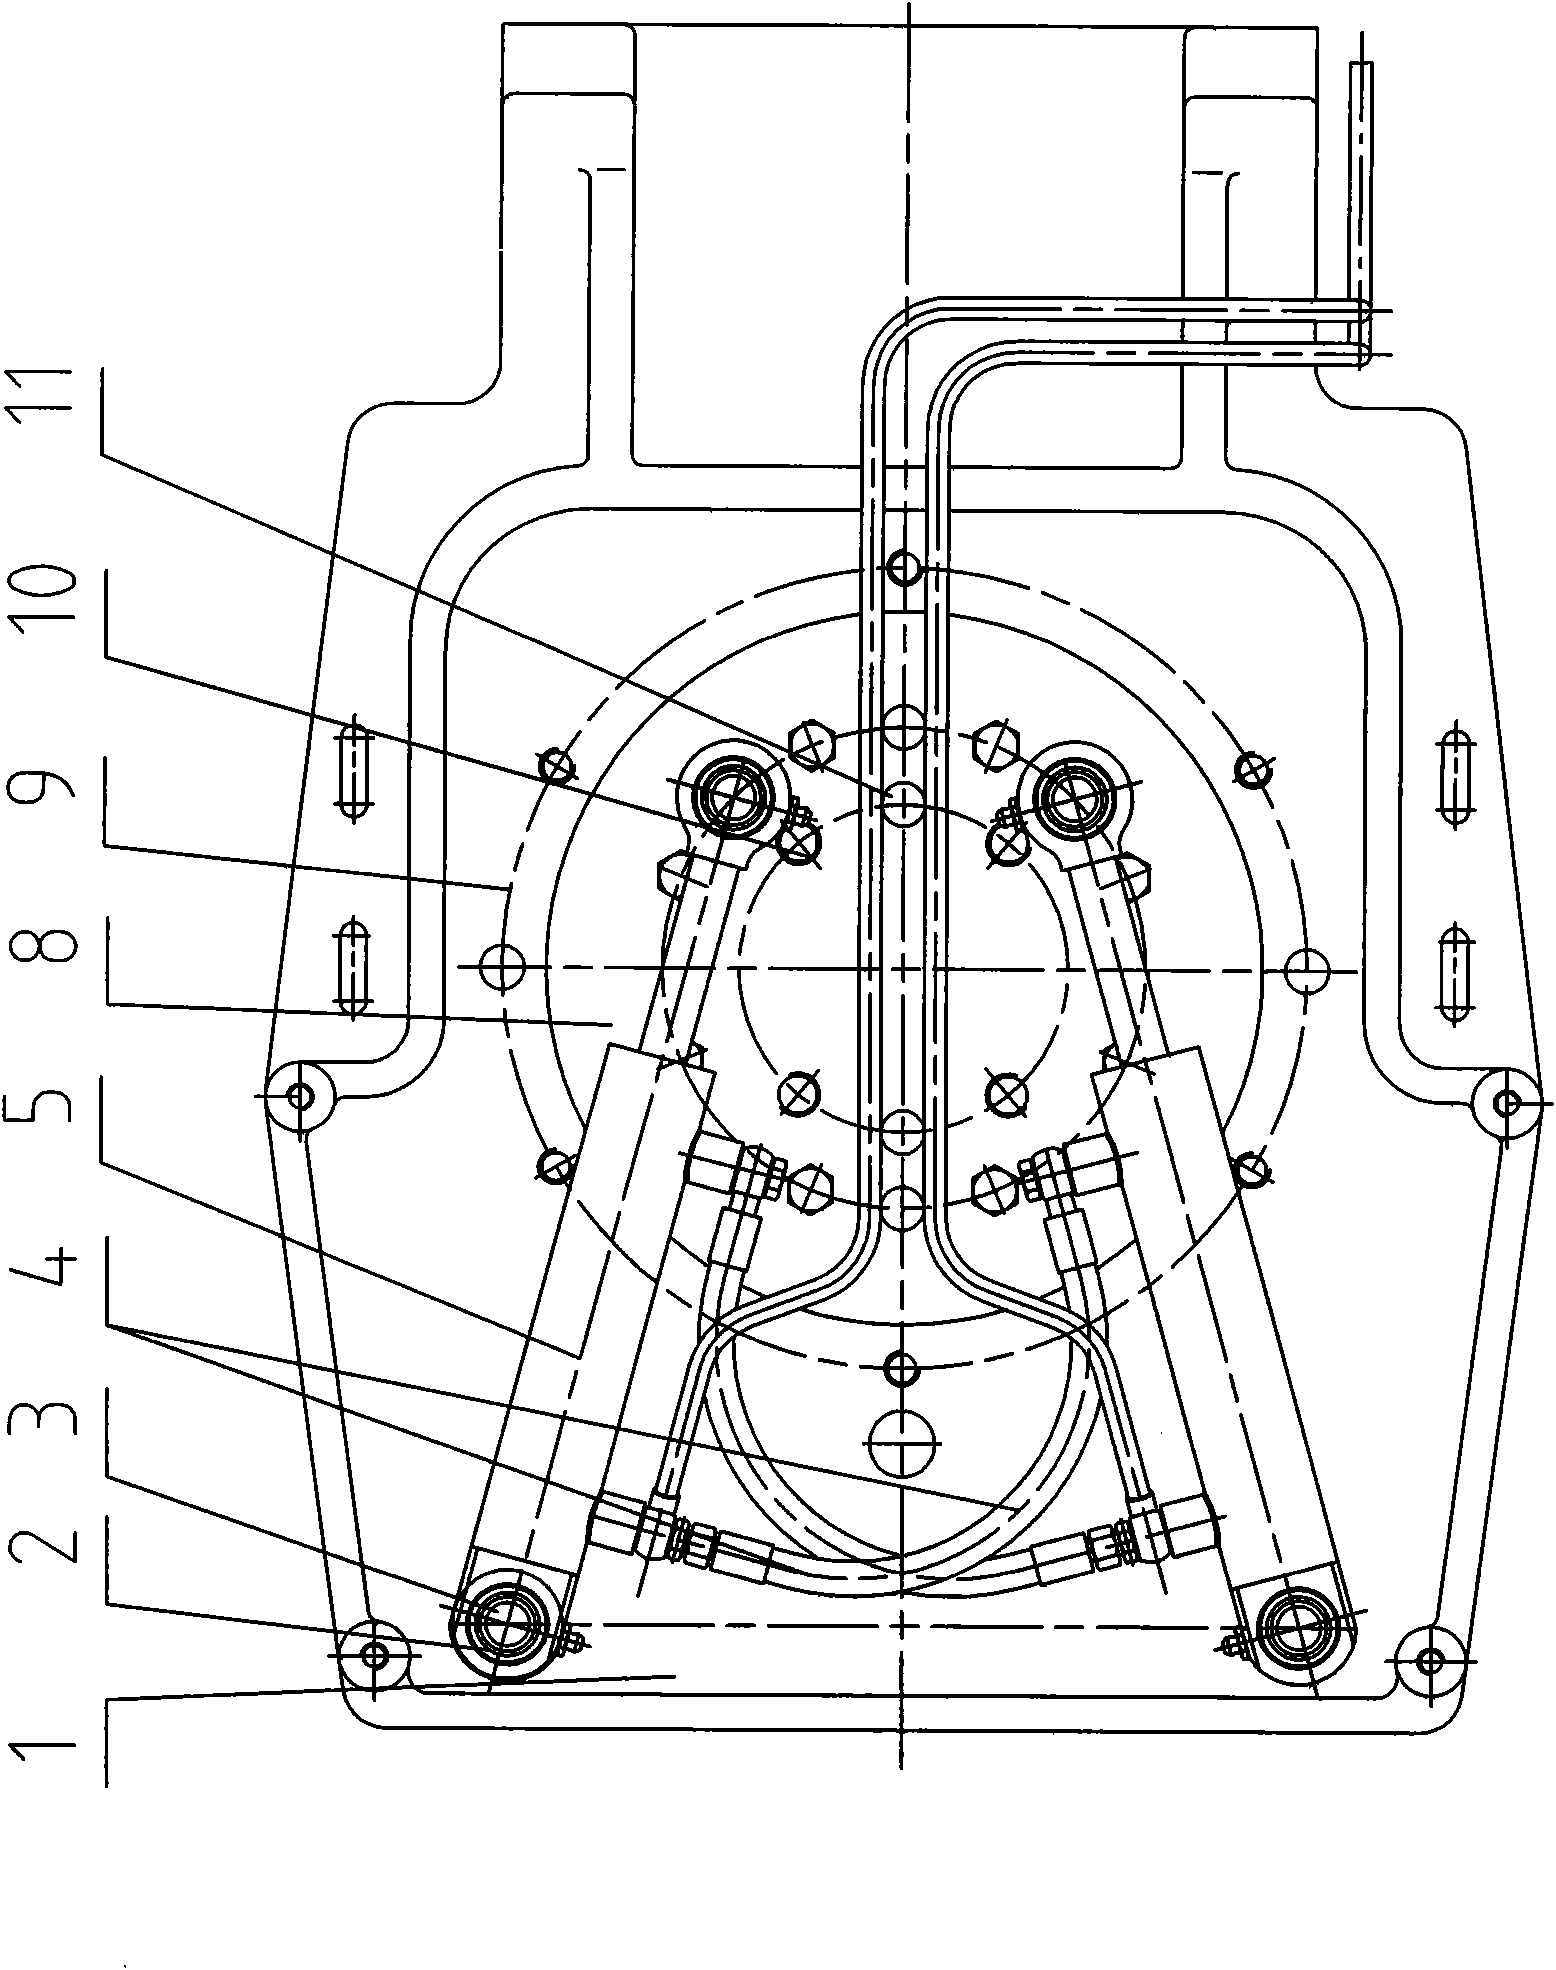 Steering mechanism of three-wheel tractor